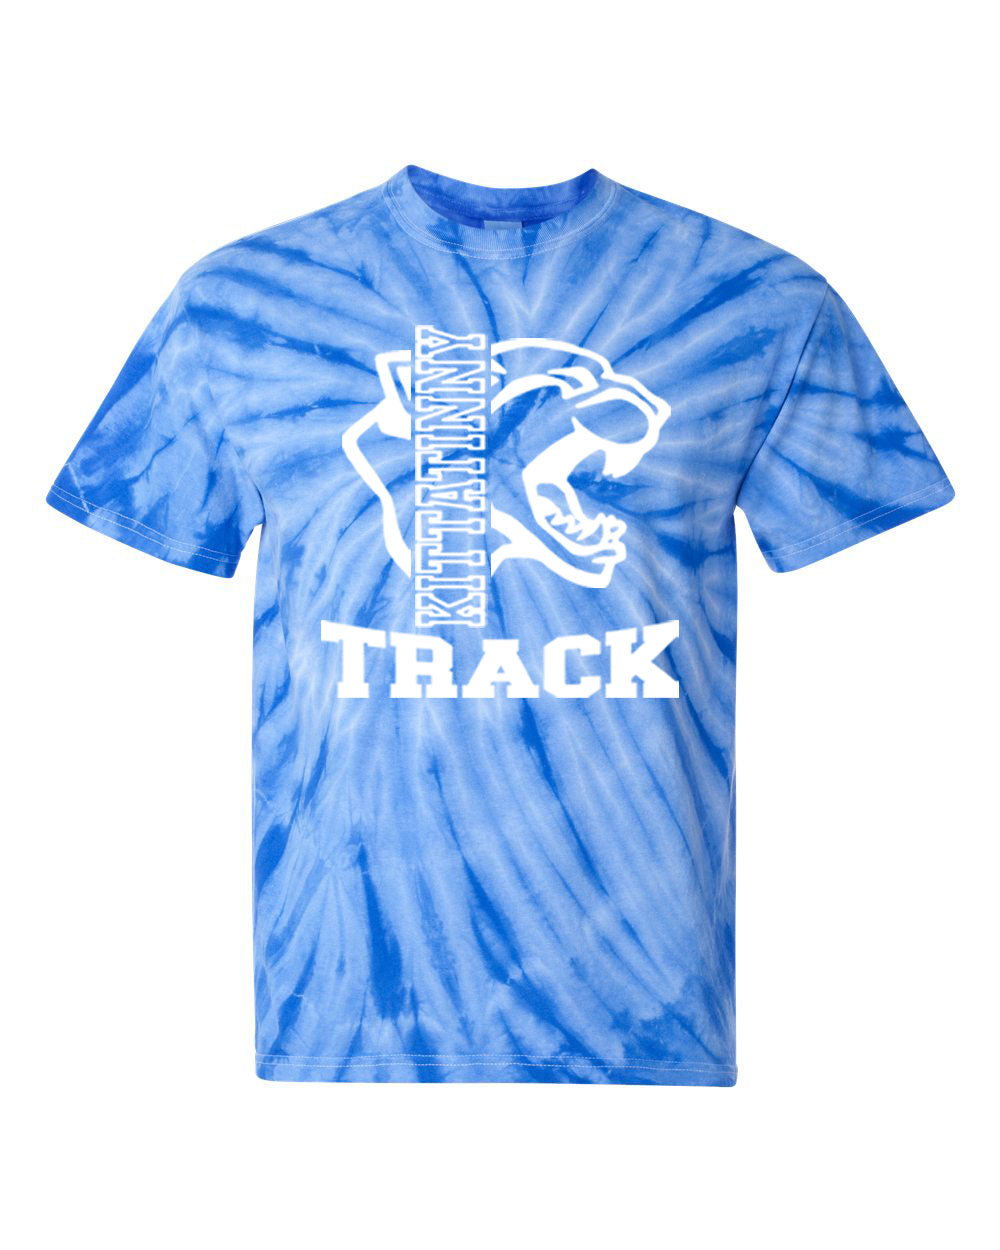 Kittatinny Track Tie Dye t-shirt Design 8